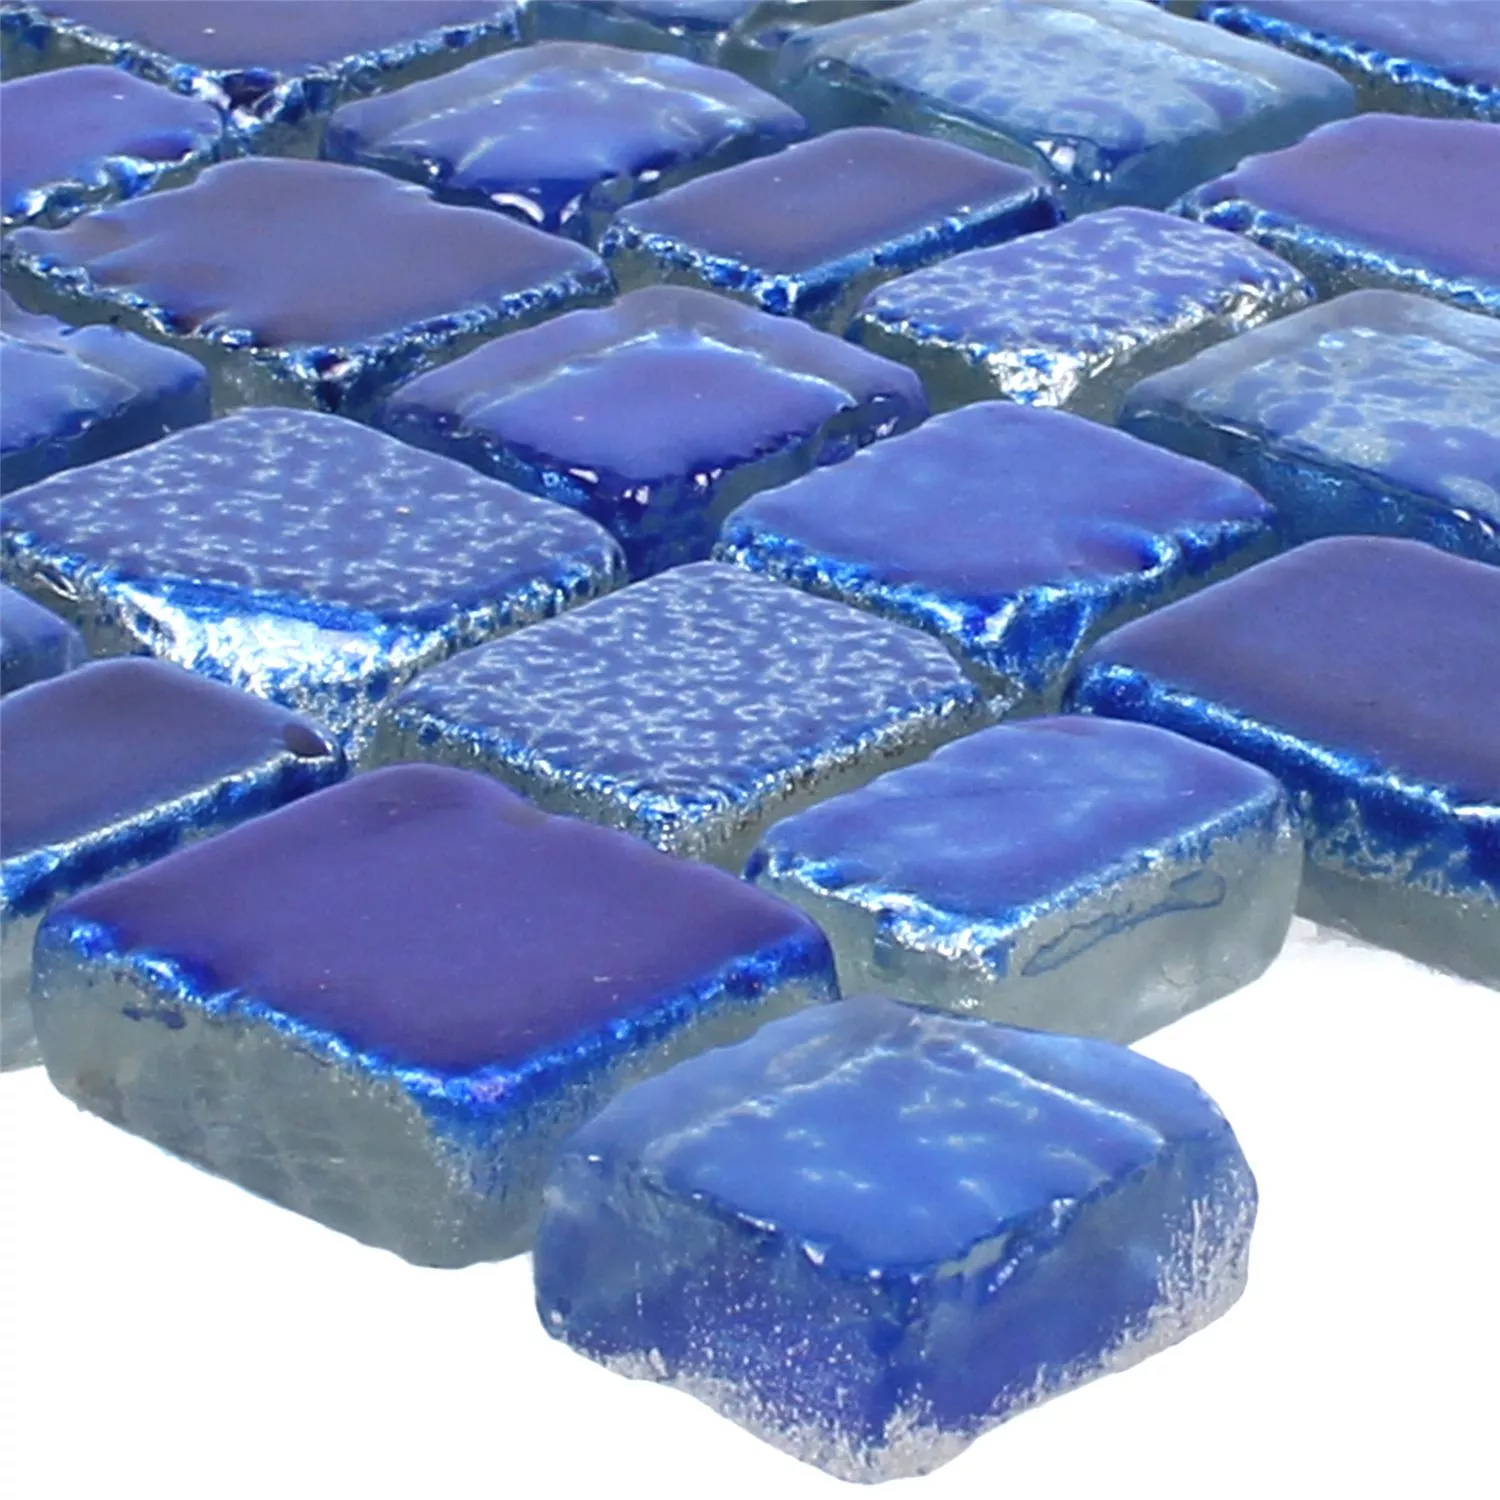 Sample Mosaic Tiles Glass Roxy Blue